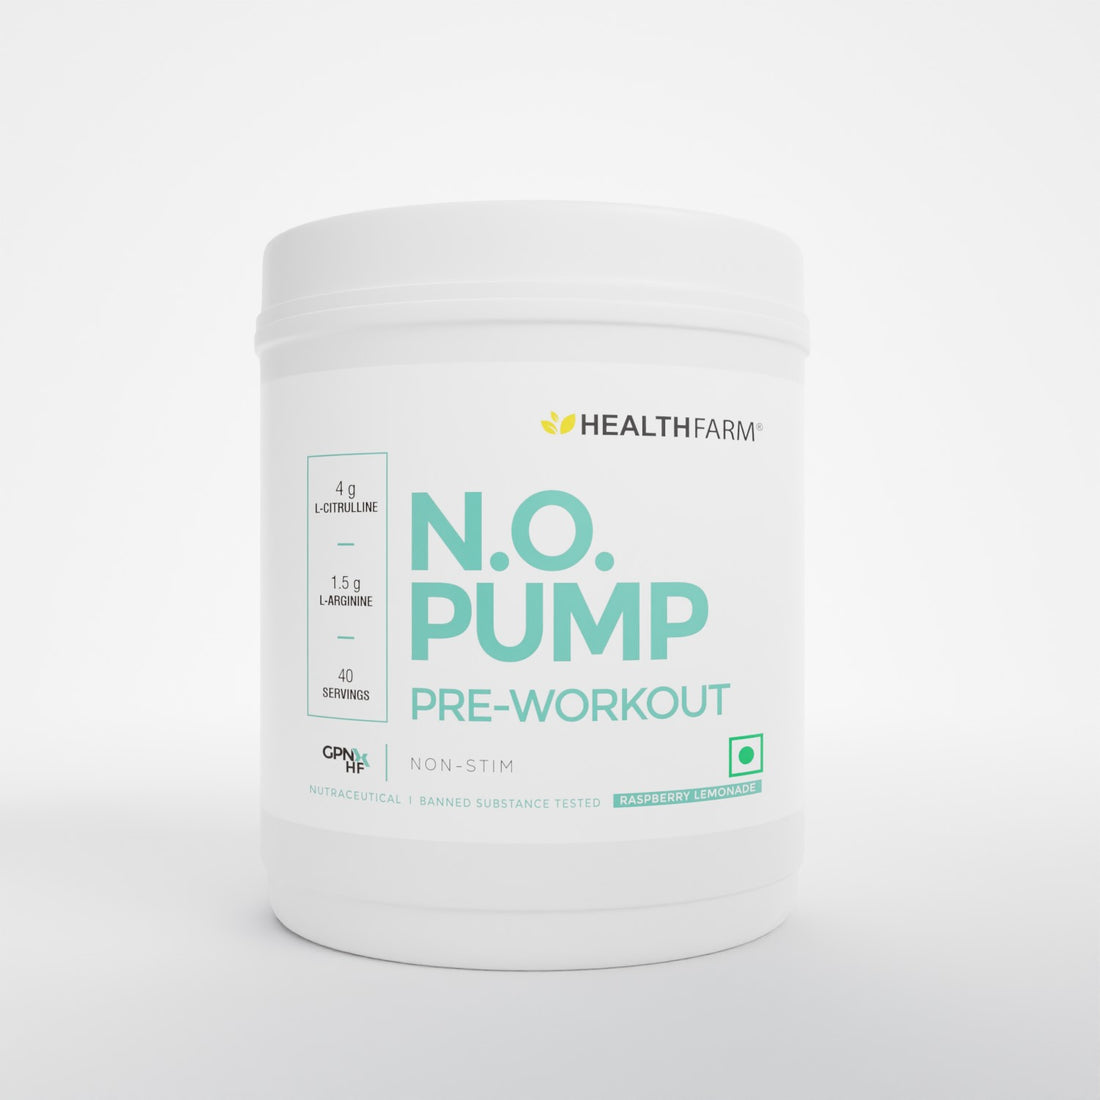 Healthfarm N.O. PUMP Pre-Workout(Non Stim) - Healthfarm Nutrition